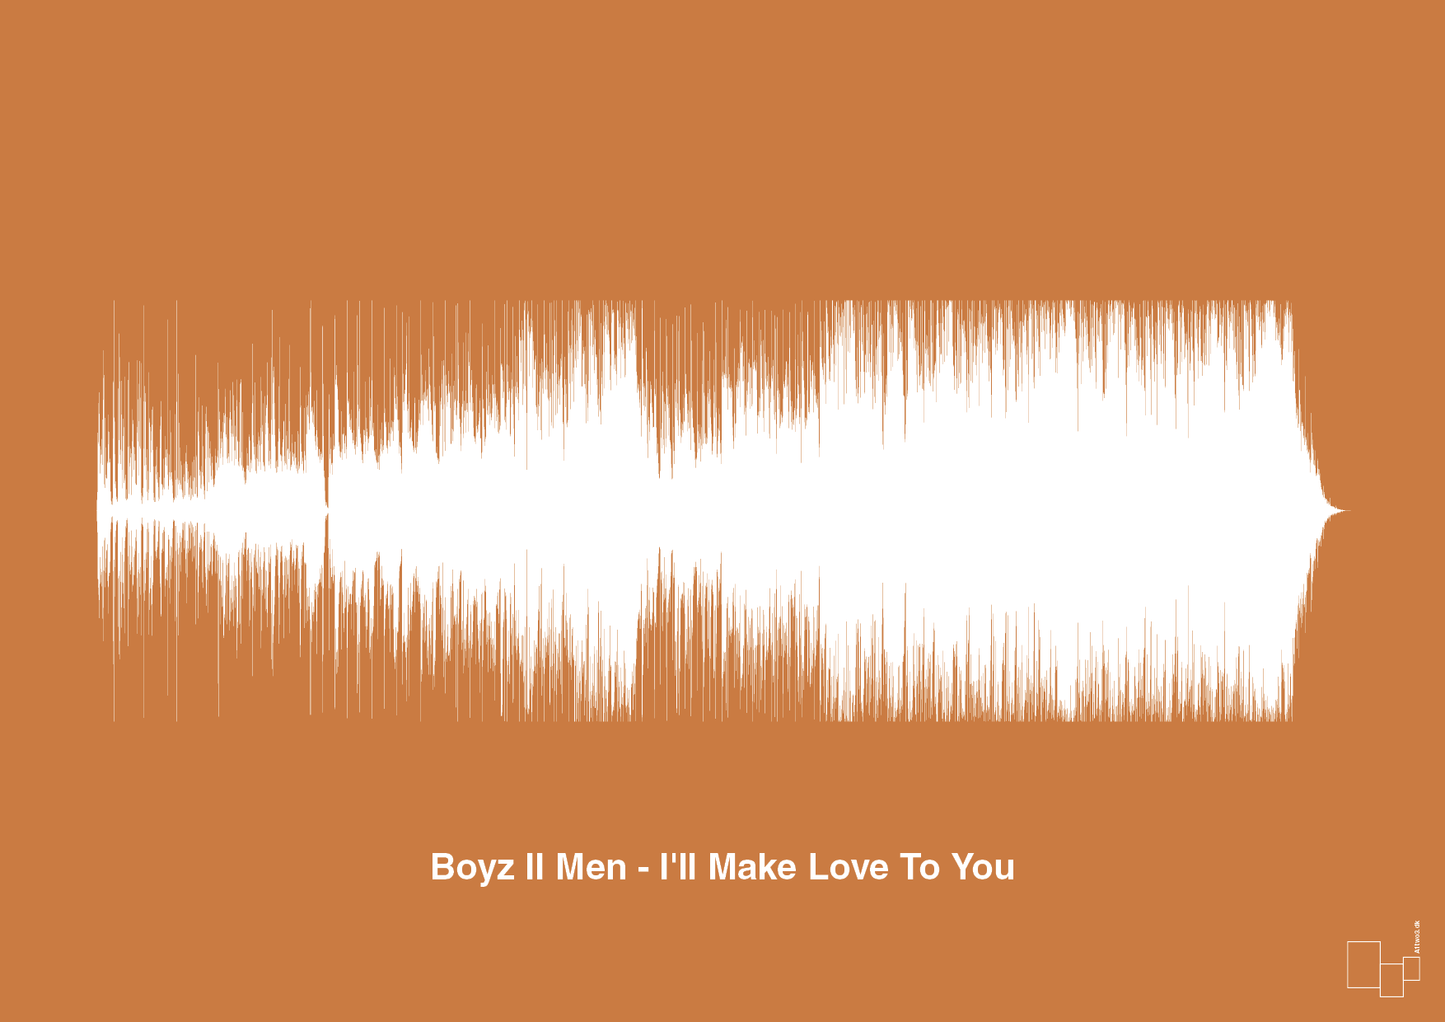 boyz II men - i'll make love to you - Plakat med Musik i Rumba Orange